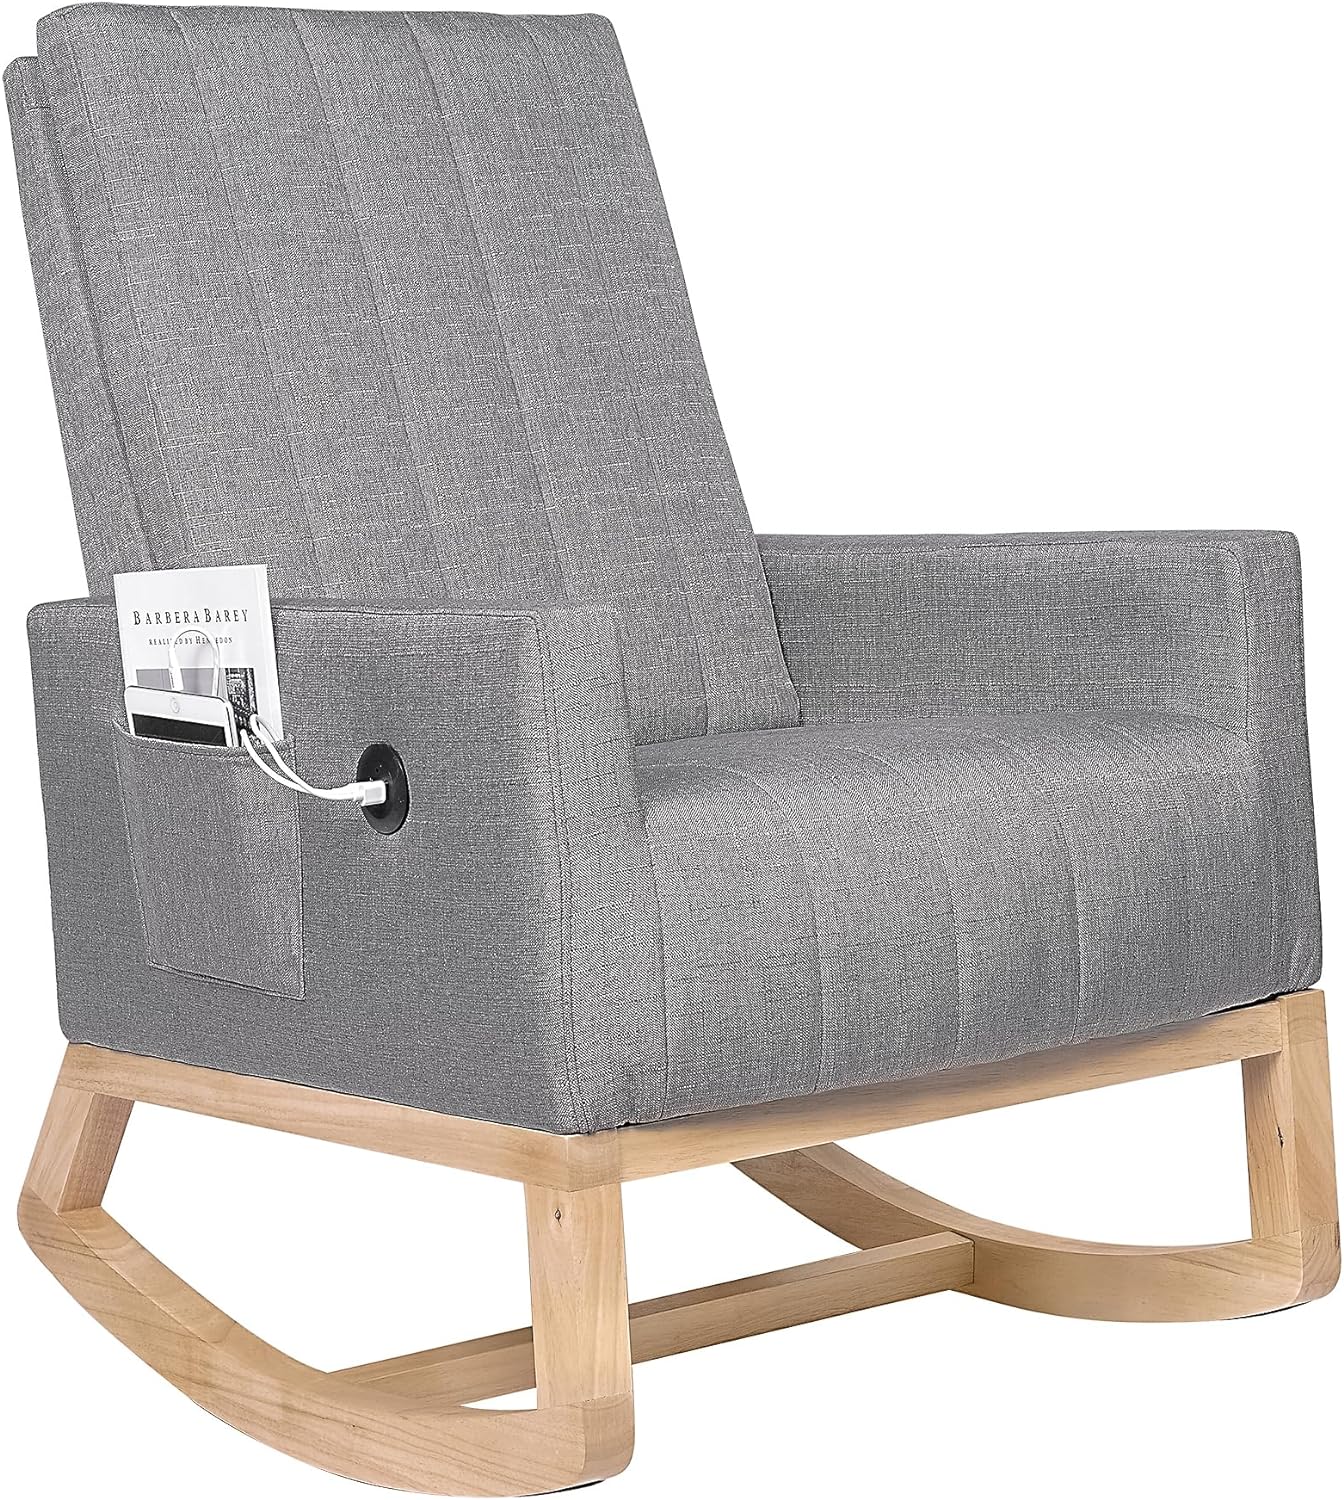 VECELO Rocking Chair Upholstered Nursery Glider Rocker High Backrest Comfy Armchair with Side Pocket and USB Port